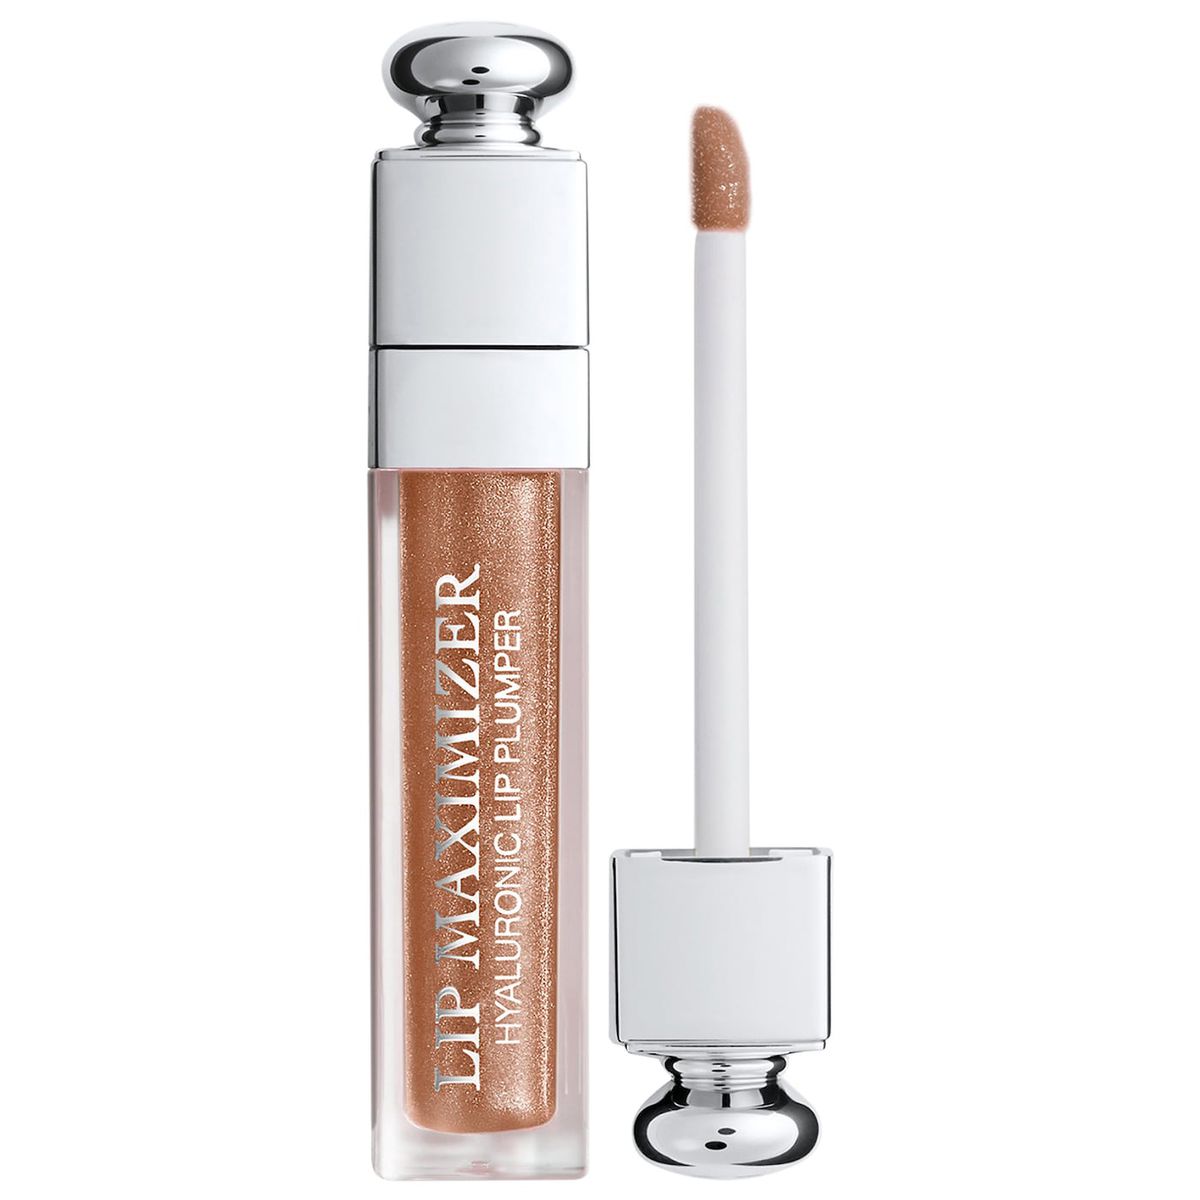 Dior Addict Lip Maximizer in 016 Shimmer Nude